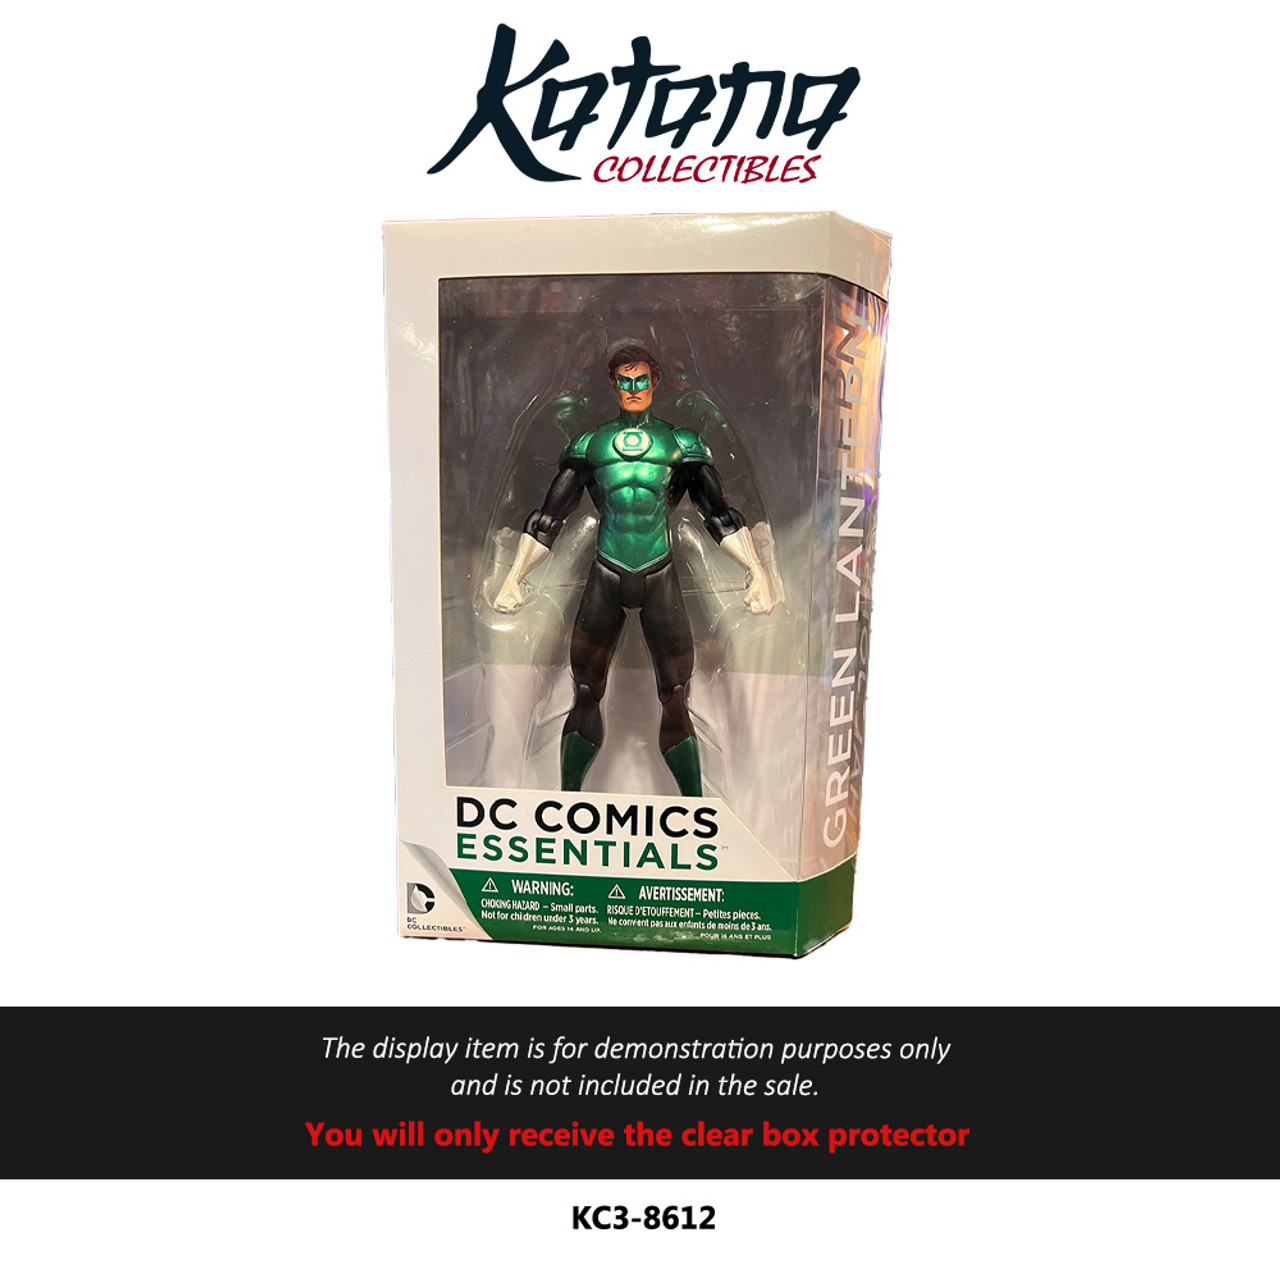 Katana Collectibles Protector For Dc Comics Essentials Green Lantern Hal Jordan